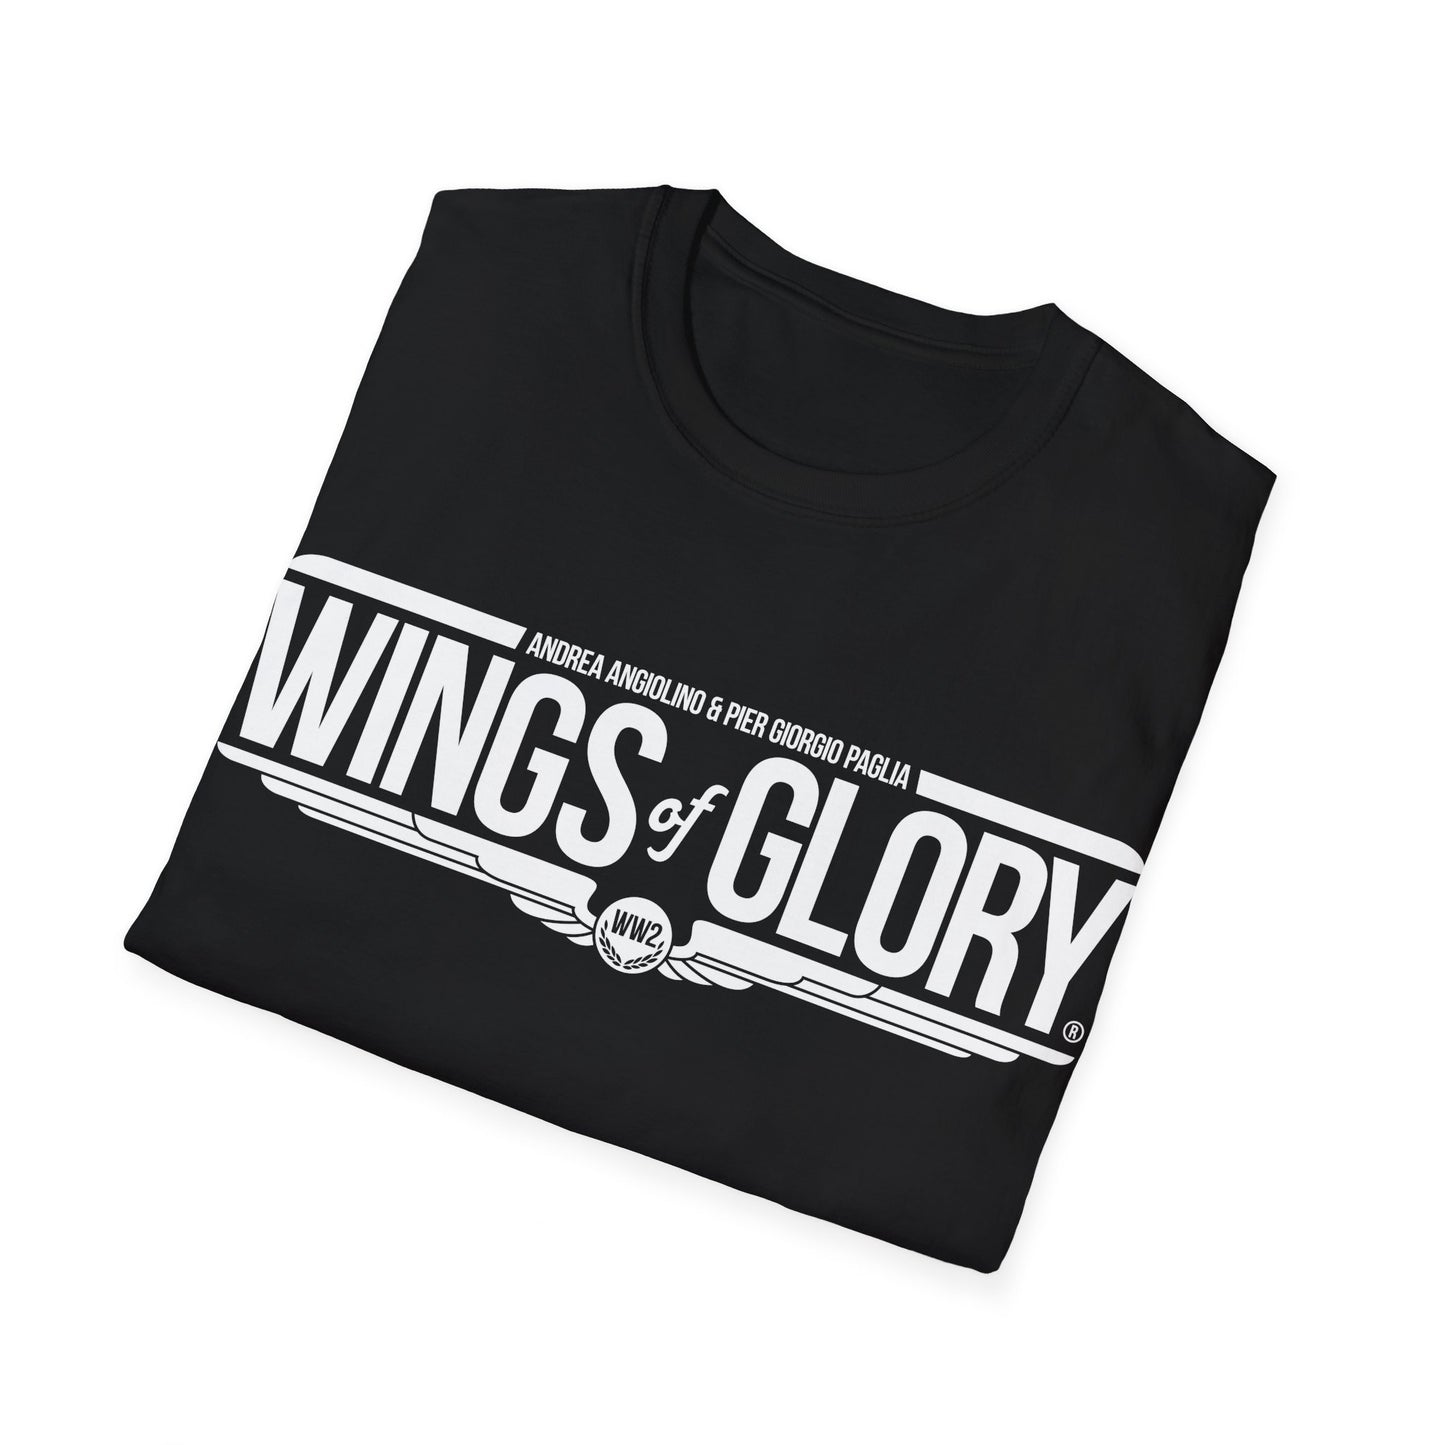 Wings Of Glory WW2 Logo shirt